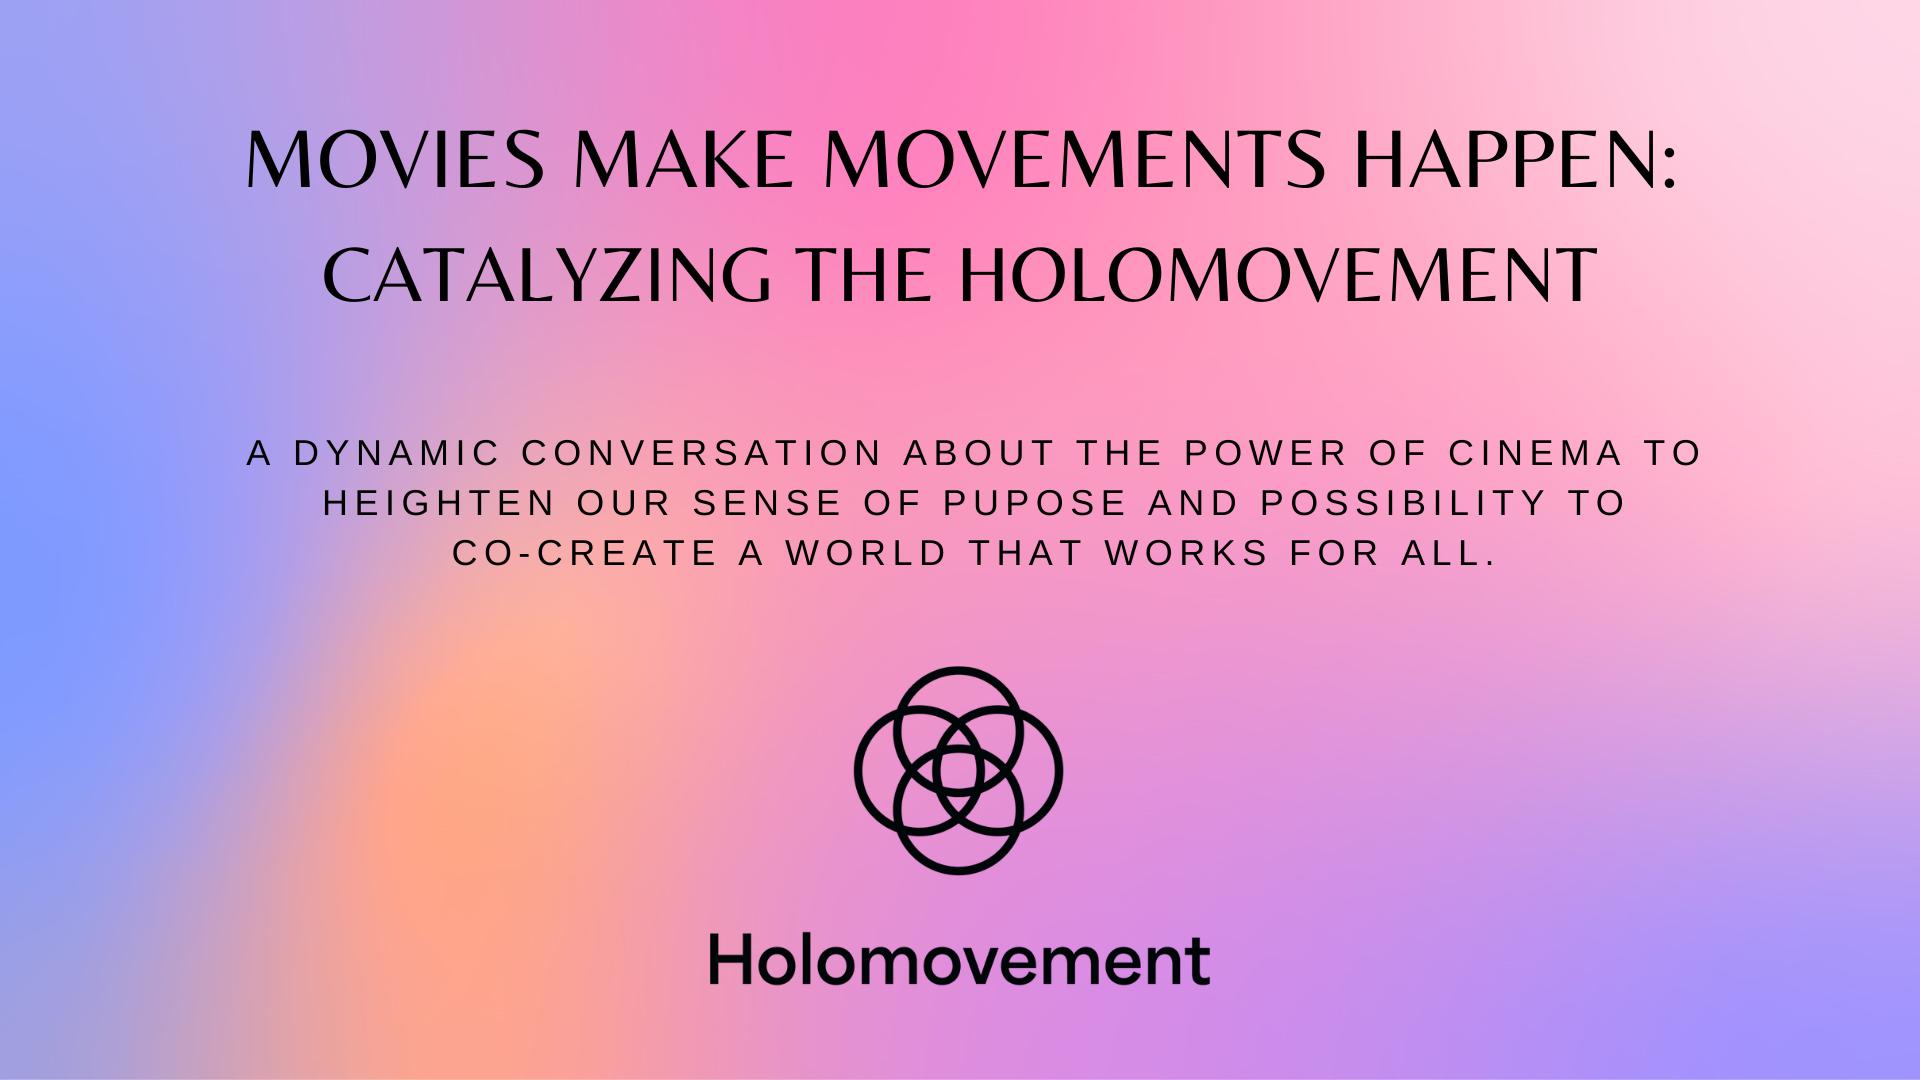 Movies Make Movements Happen: Catalyzing the Holomovement